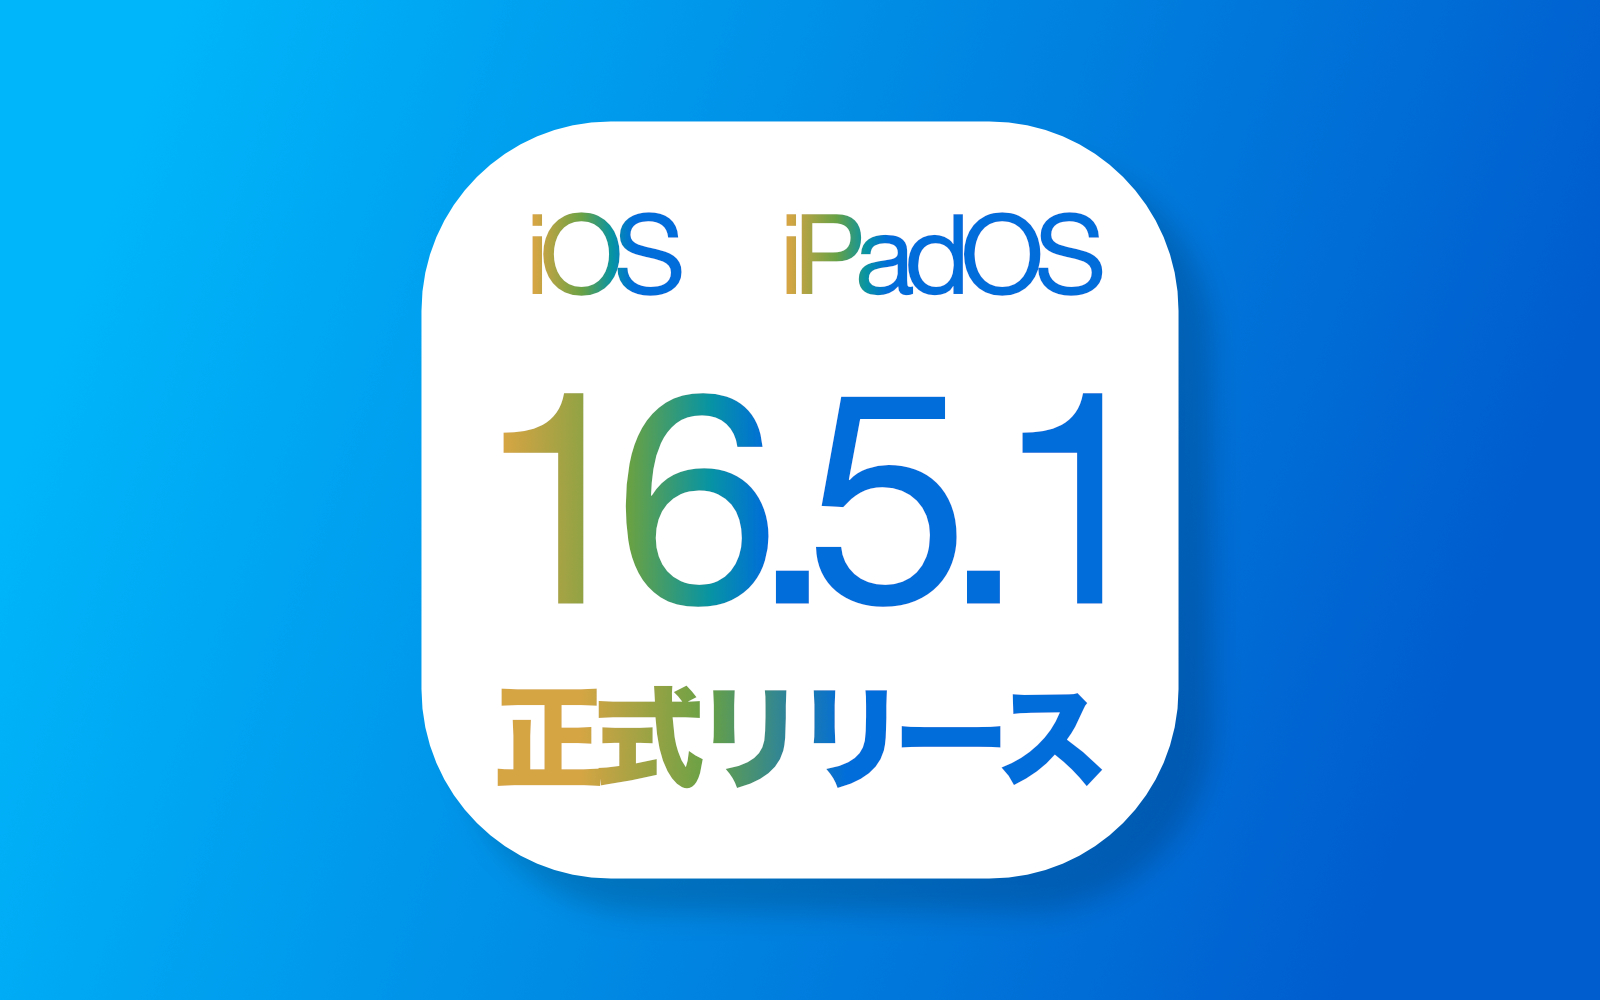 IOS16 5 1 officila release